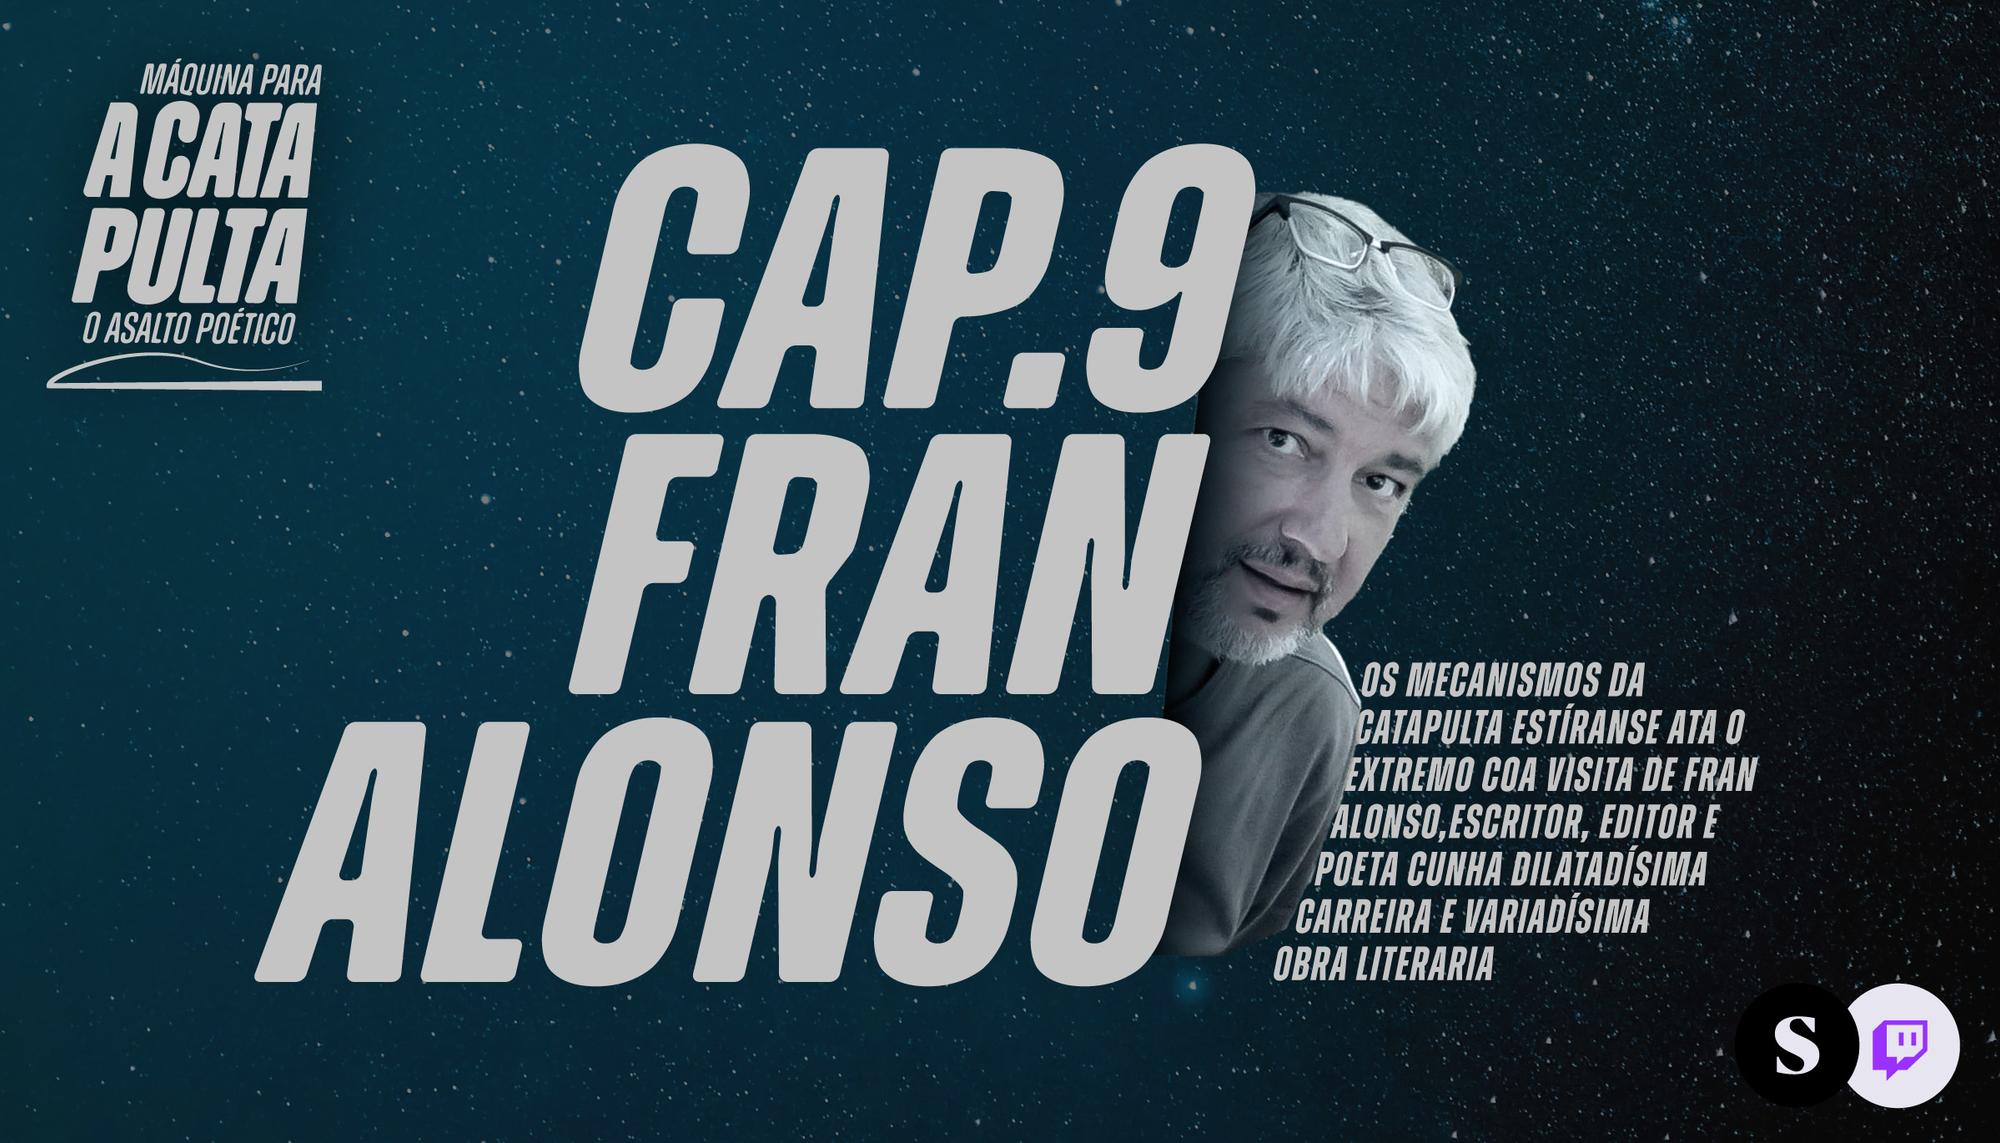 A Catapulta capitulo 9 Fran Alonso